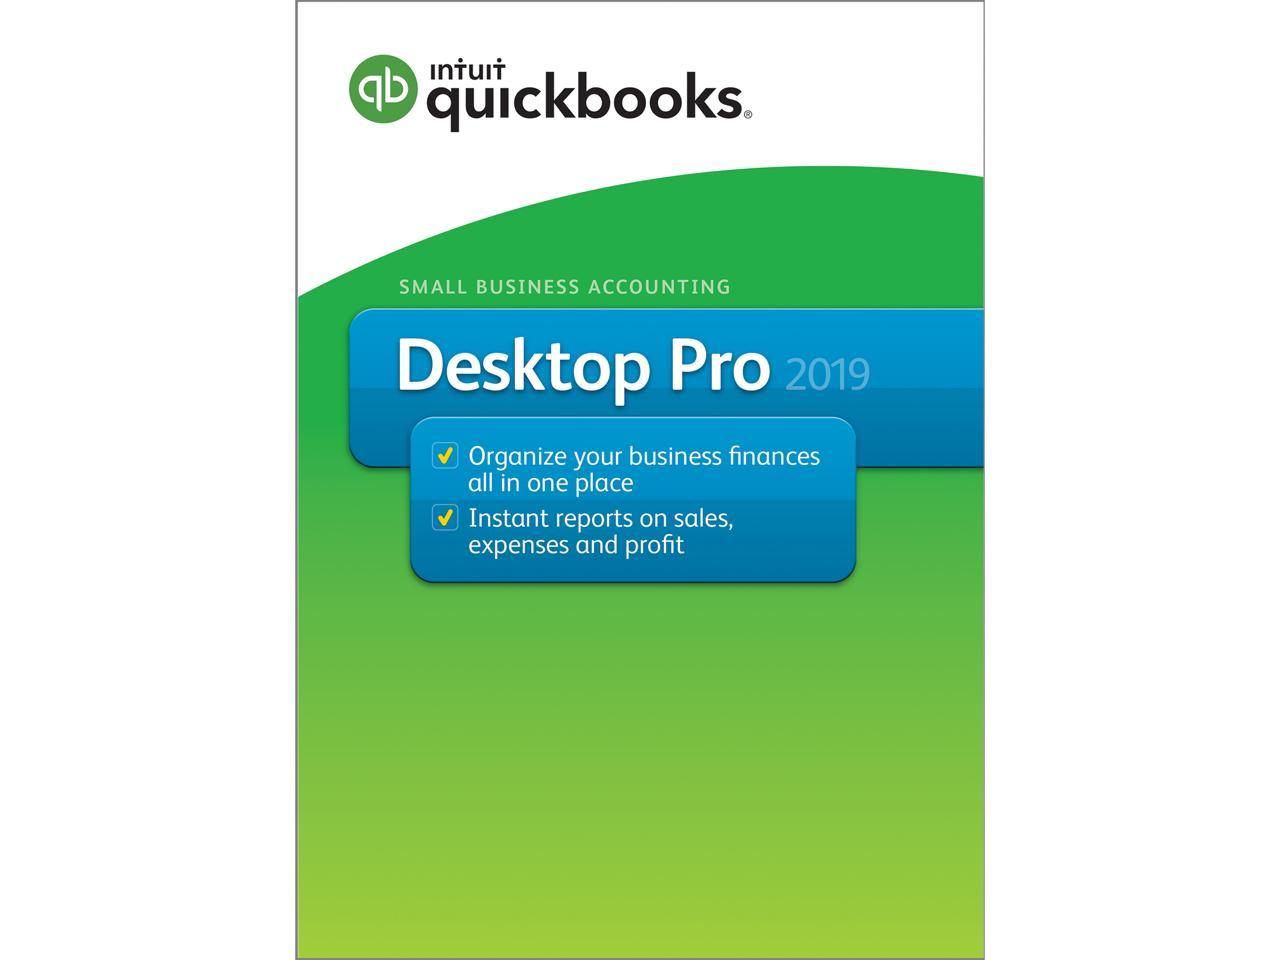 intuit quickbooks desktop pro 2016 download r3